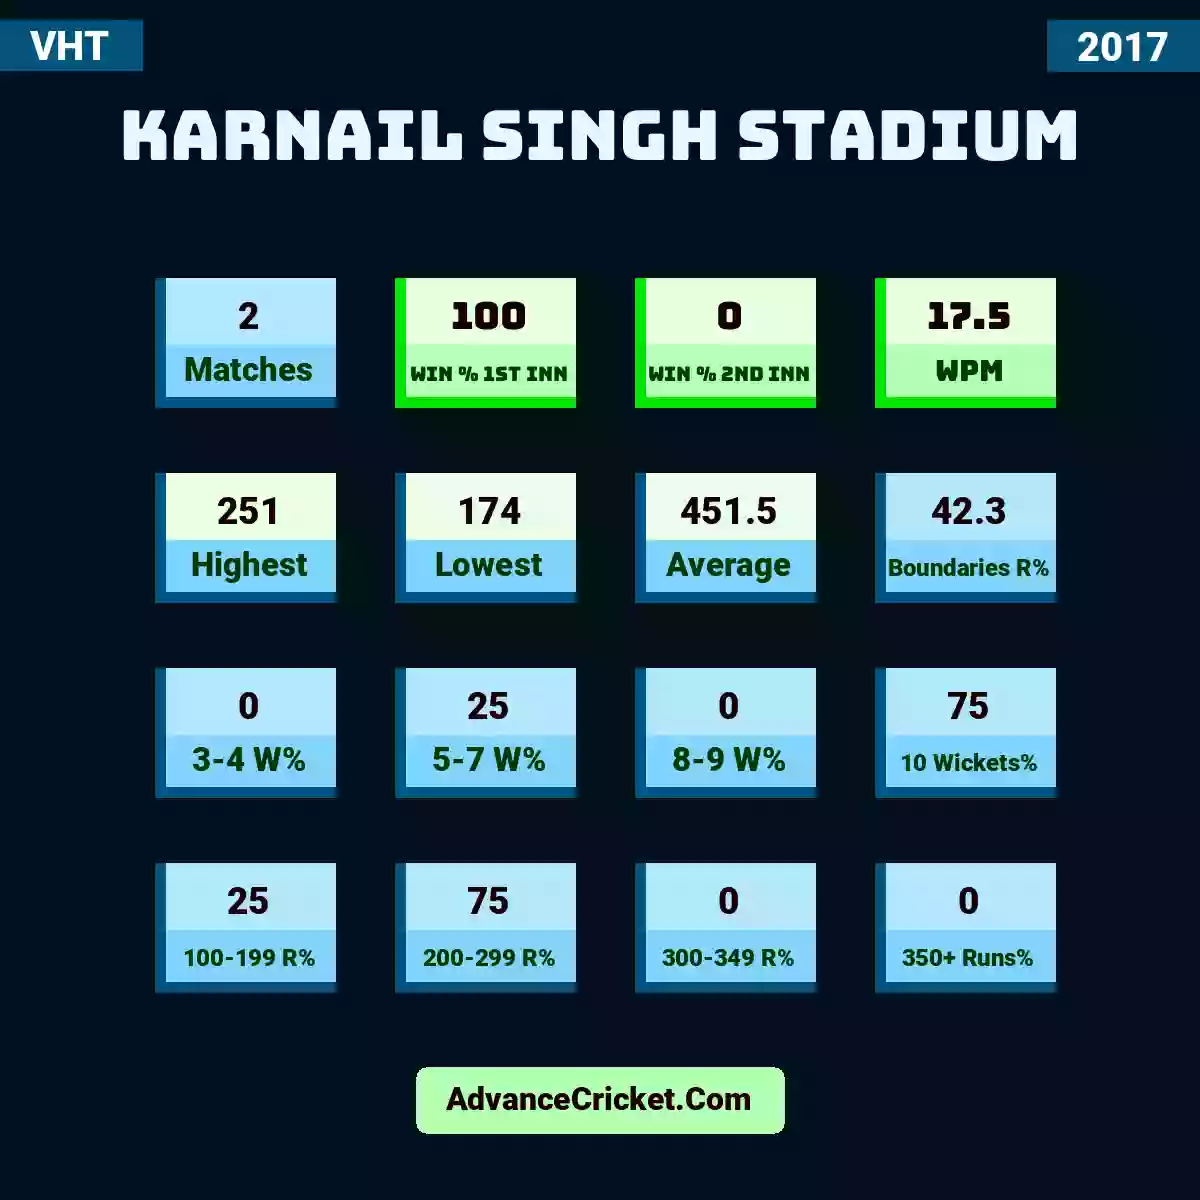 Image showing Karnail Singh Stadium with Matches: 2, Win % 1st Inn: 100, Win % 2nd Inn: 0, WPM: 17.5, Highest: 251, Lowest: 174, Average: 451.5, Boundaries R%: 42.3, 3-4 W%: 0, 5-7 W%: 25, 8-9 W%: 0, 10 Wickets%: 75, 100-199 R%: 25, 200-299 R%: 75, 300-349 R%: 0, 350+ Runs%: 0.